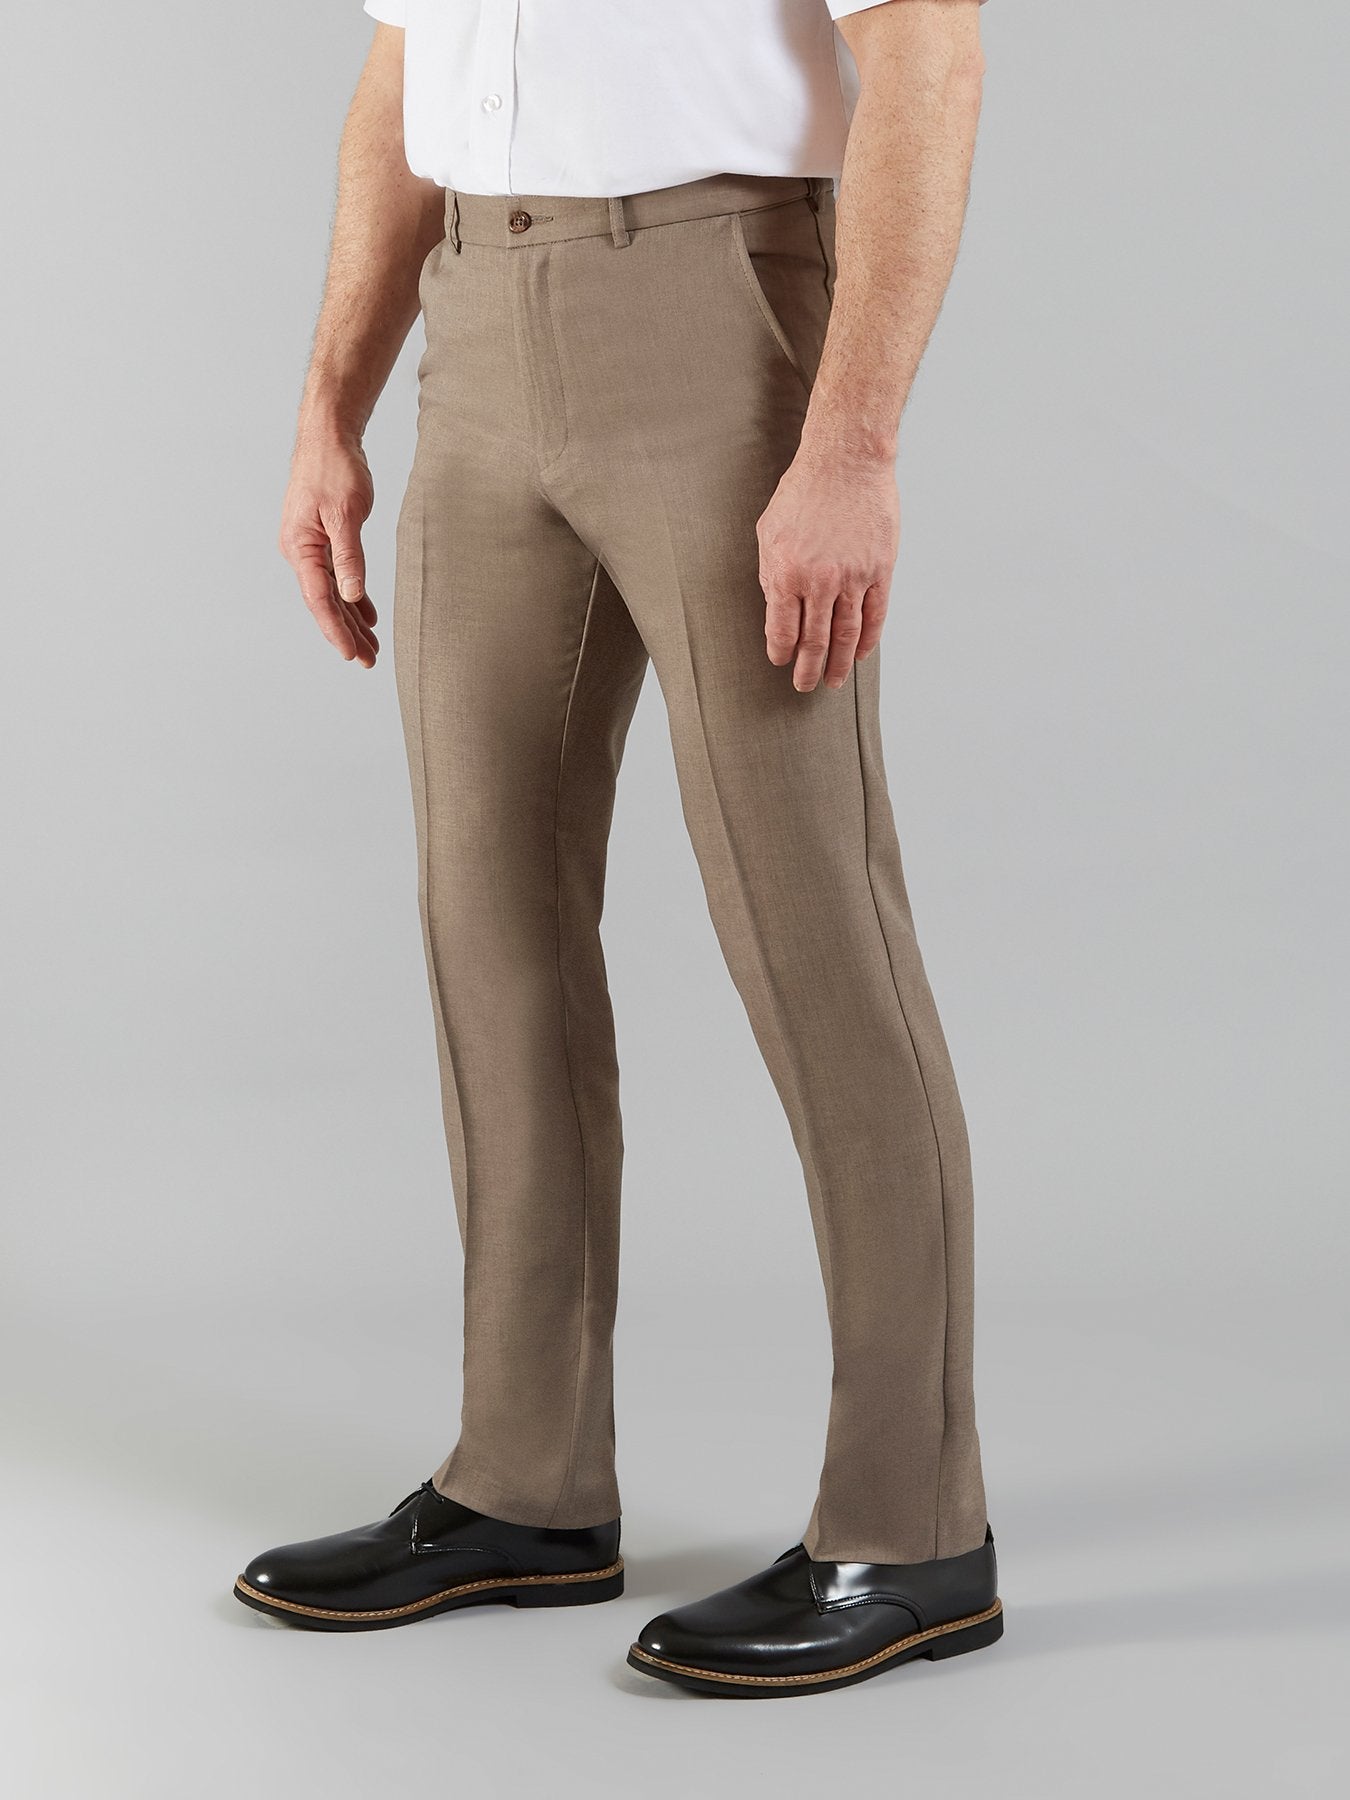 Vintage farah mens trousers - Gem